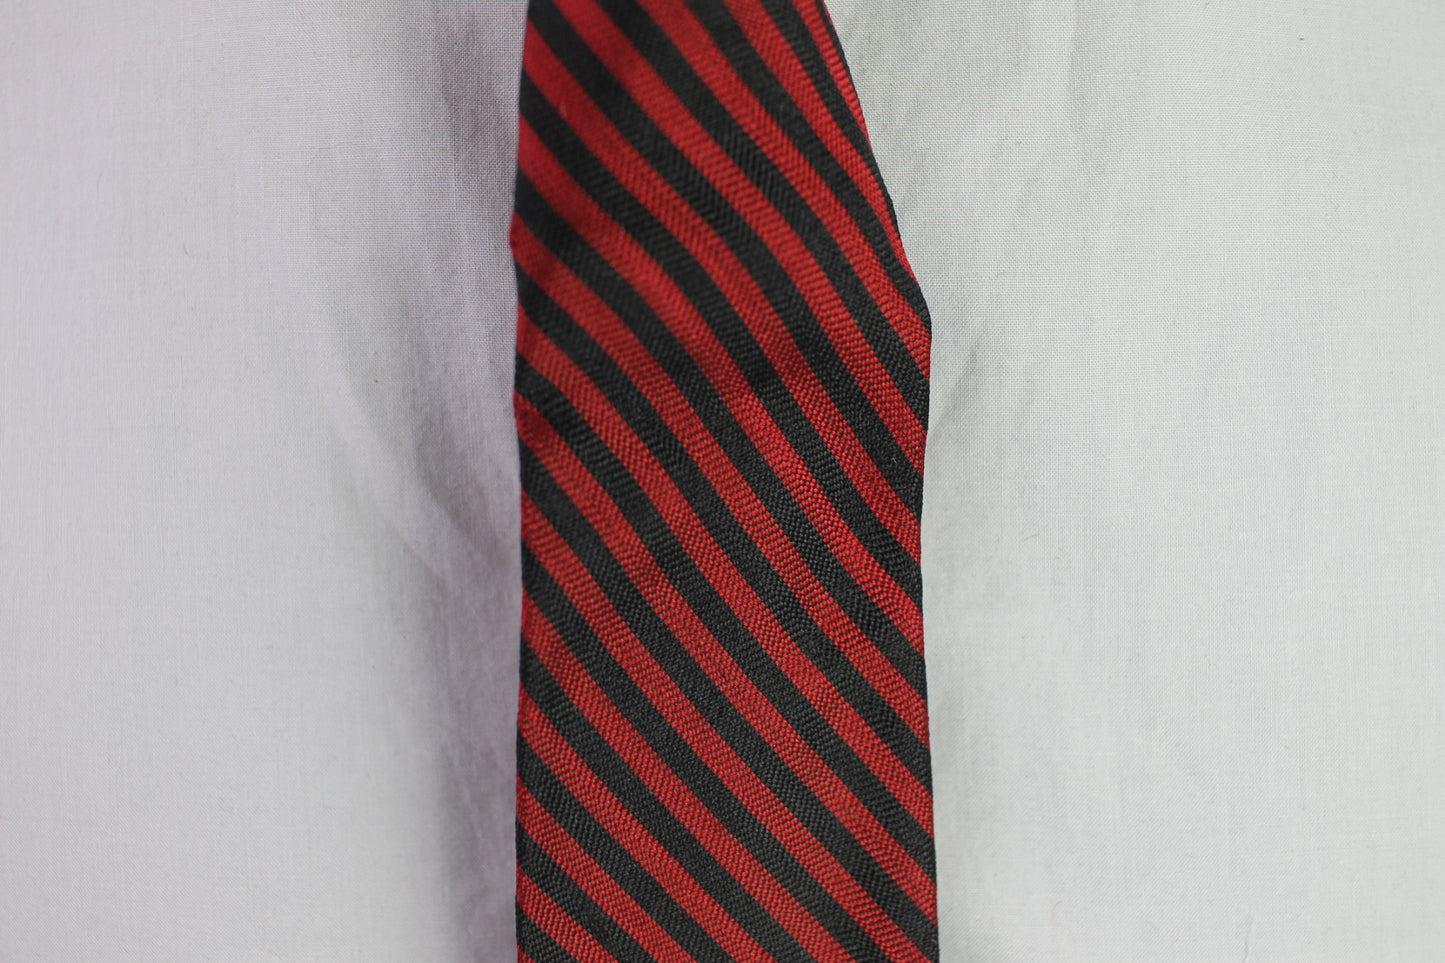 Vintage Haband Paterson all silk dark red black striped pattern skinny tie